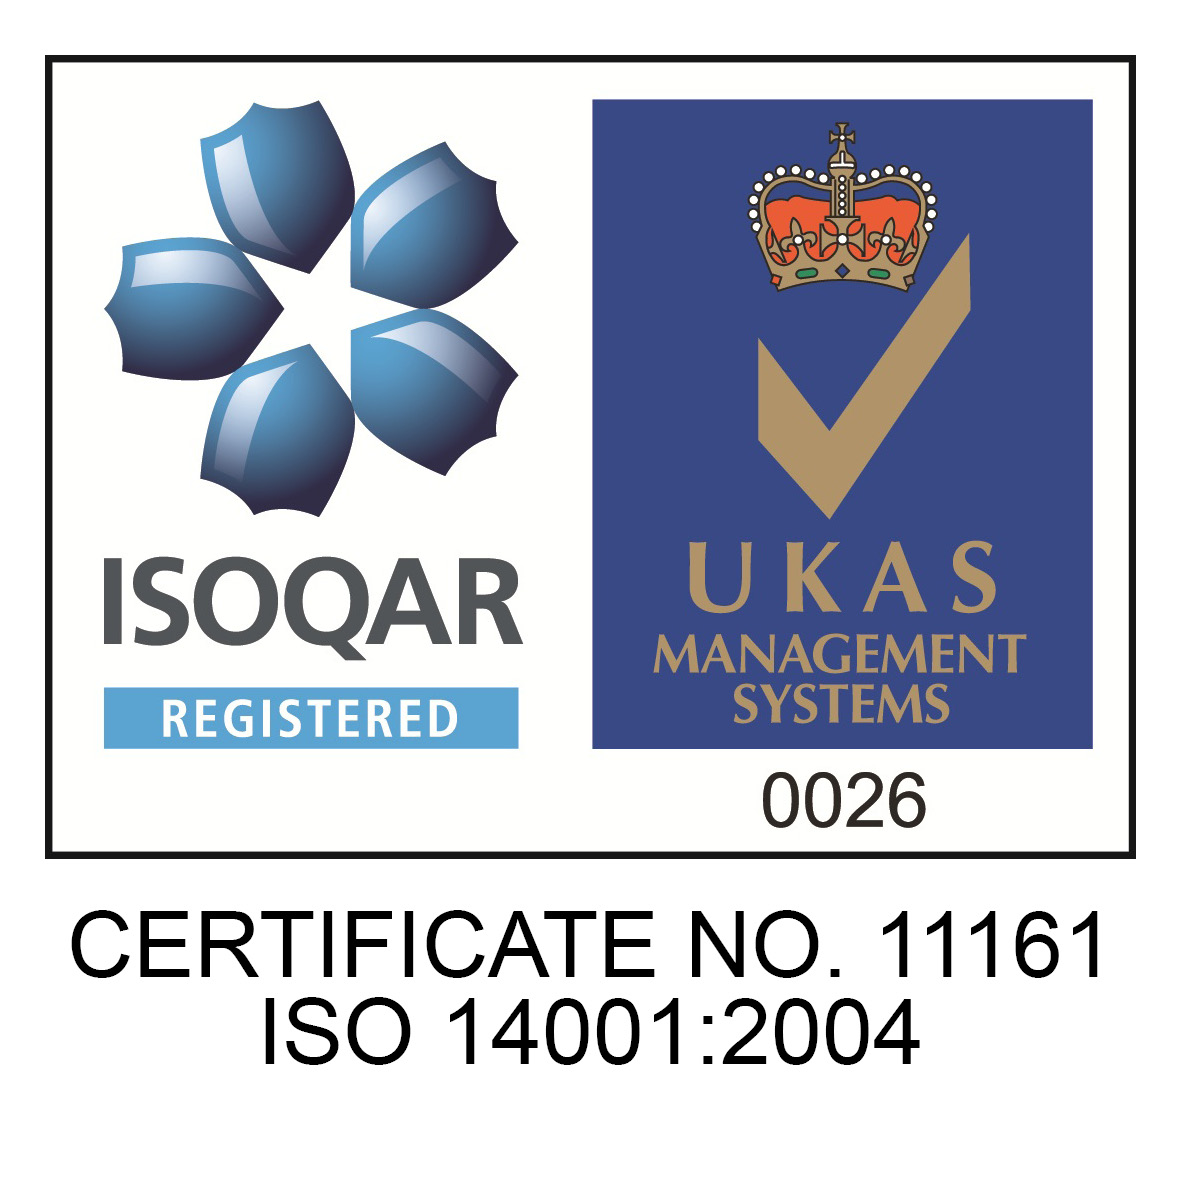 UKAS ISOQAR LOGO 14001